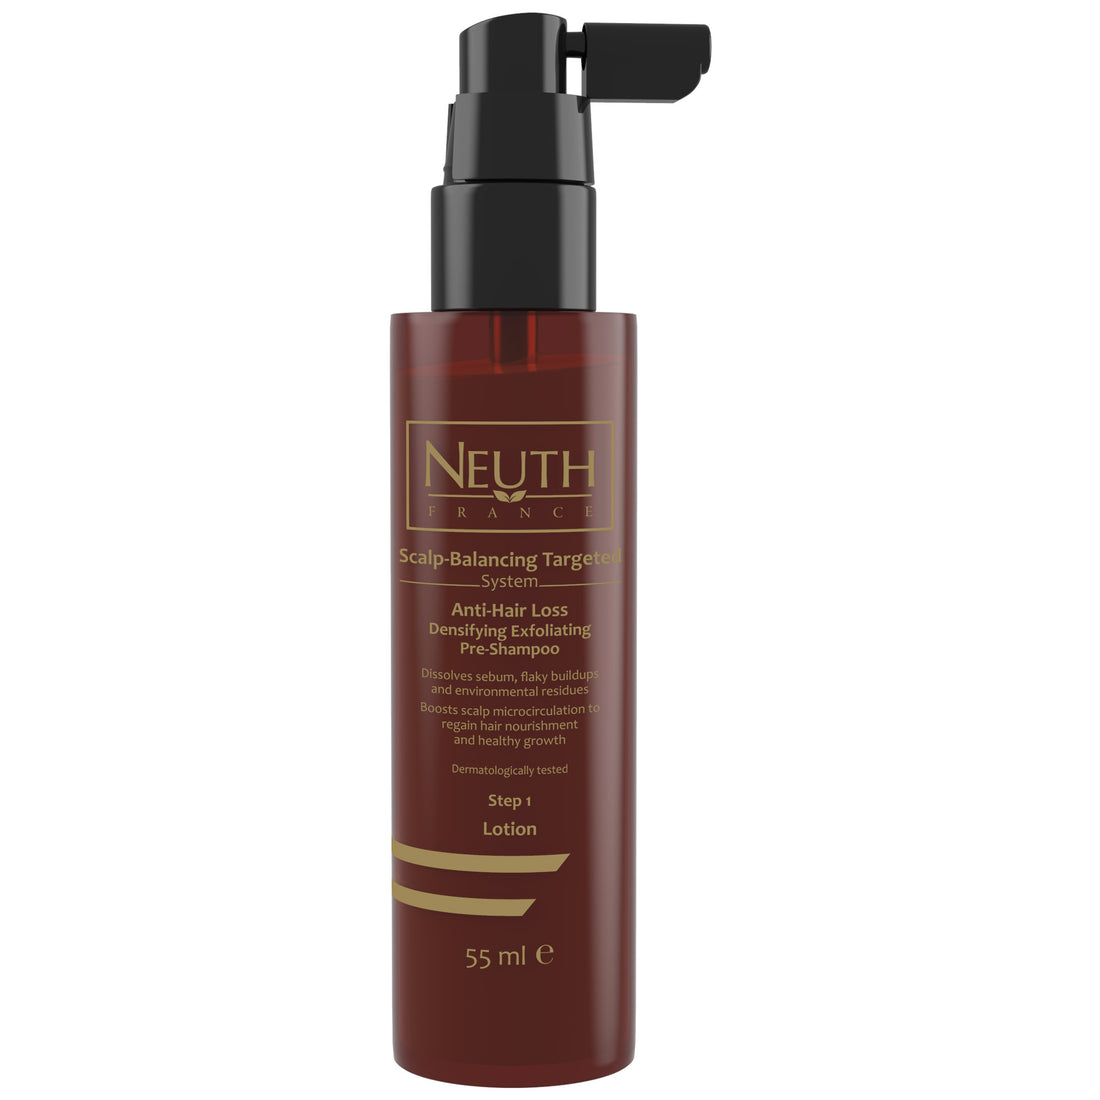 Neuth Anti-Hair Loss Densifying Exfoliating Pre-Shampoo Scalp Balancing Targeted System55 ml